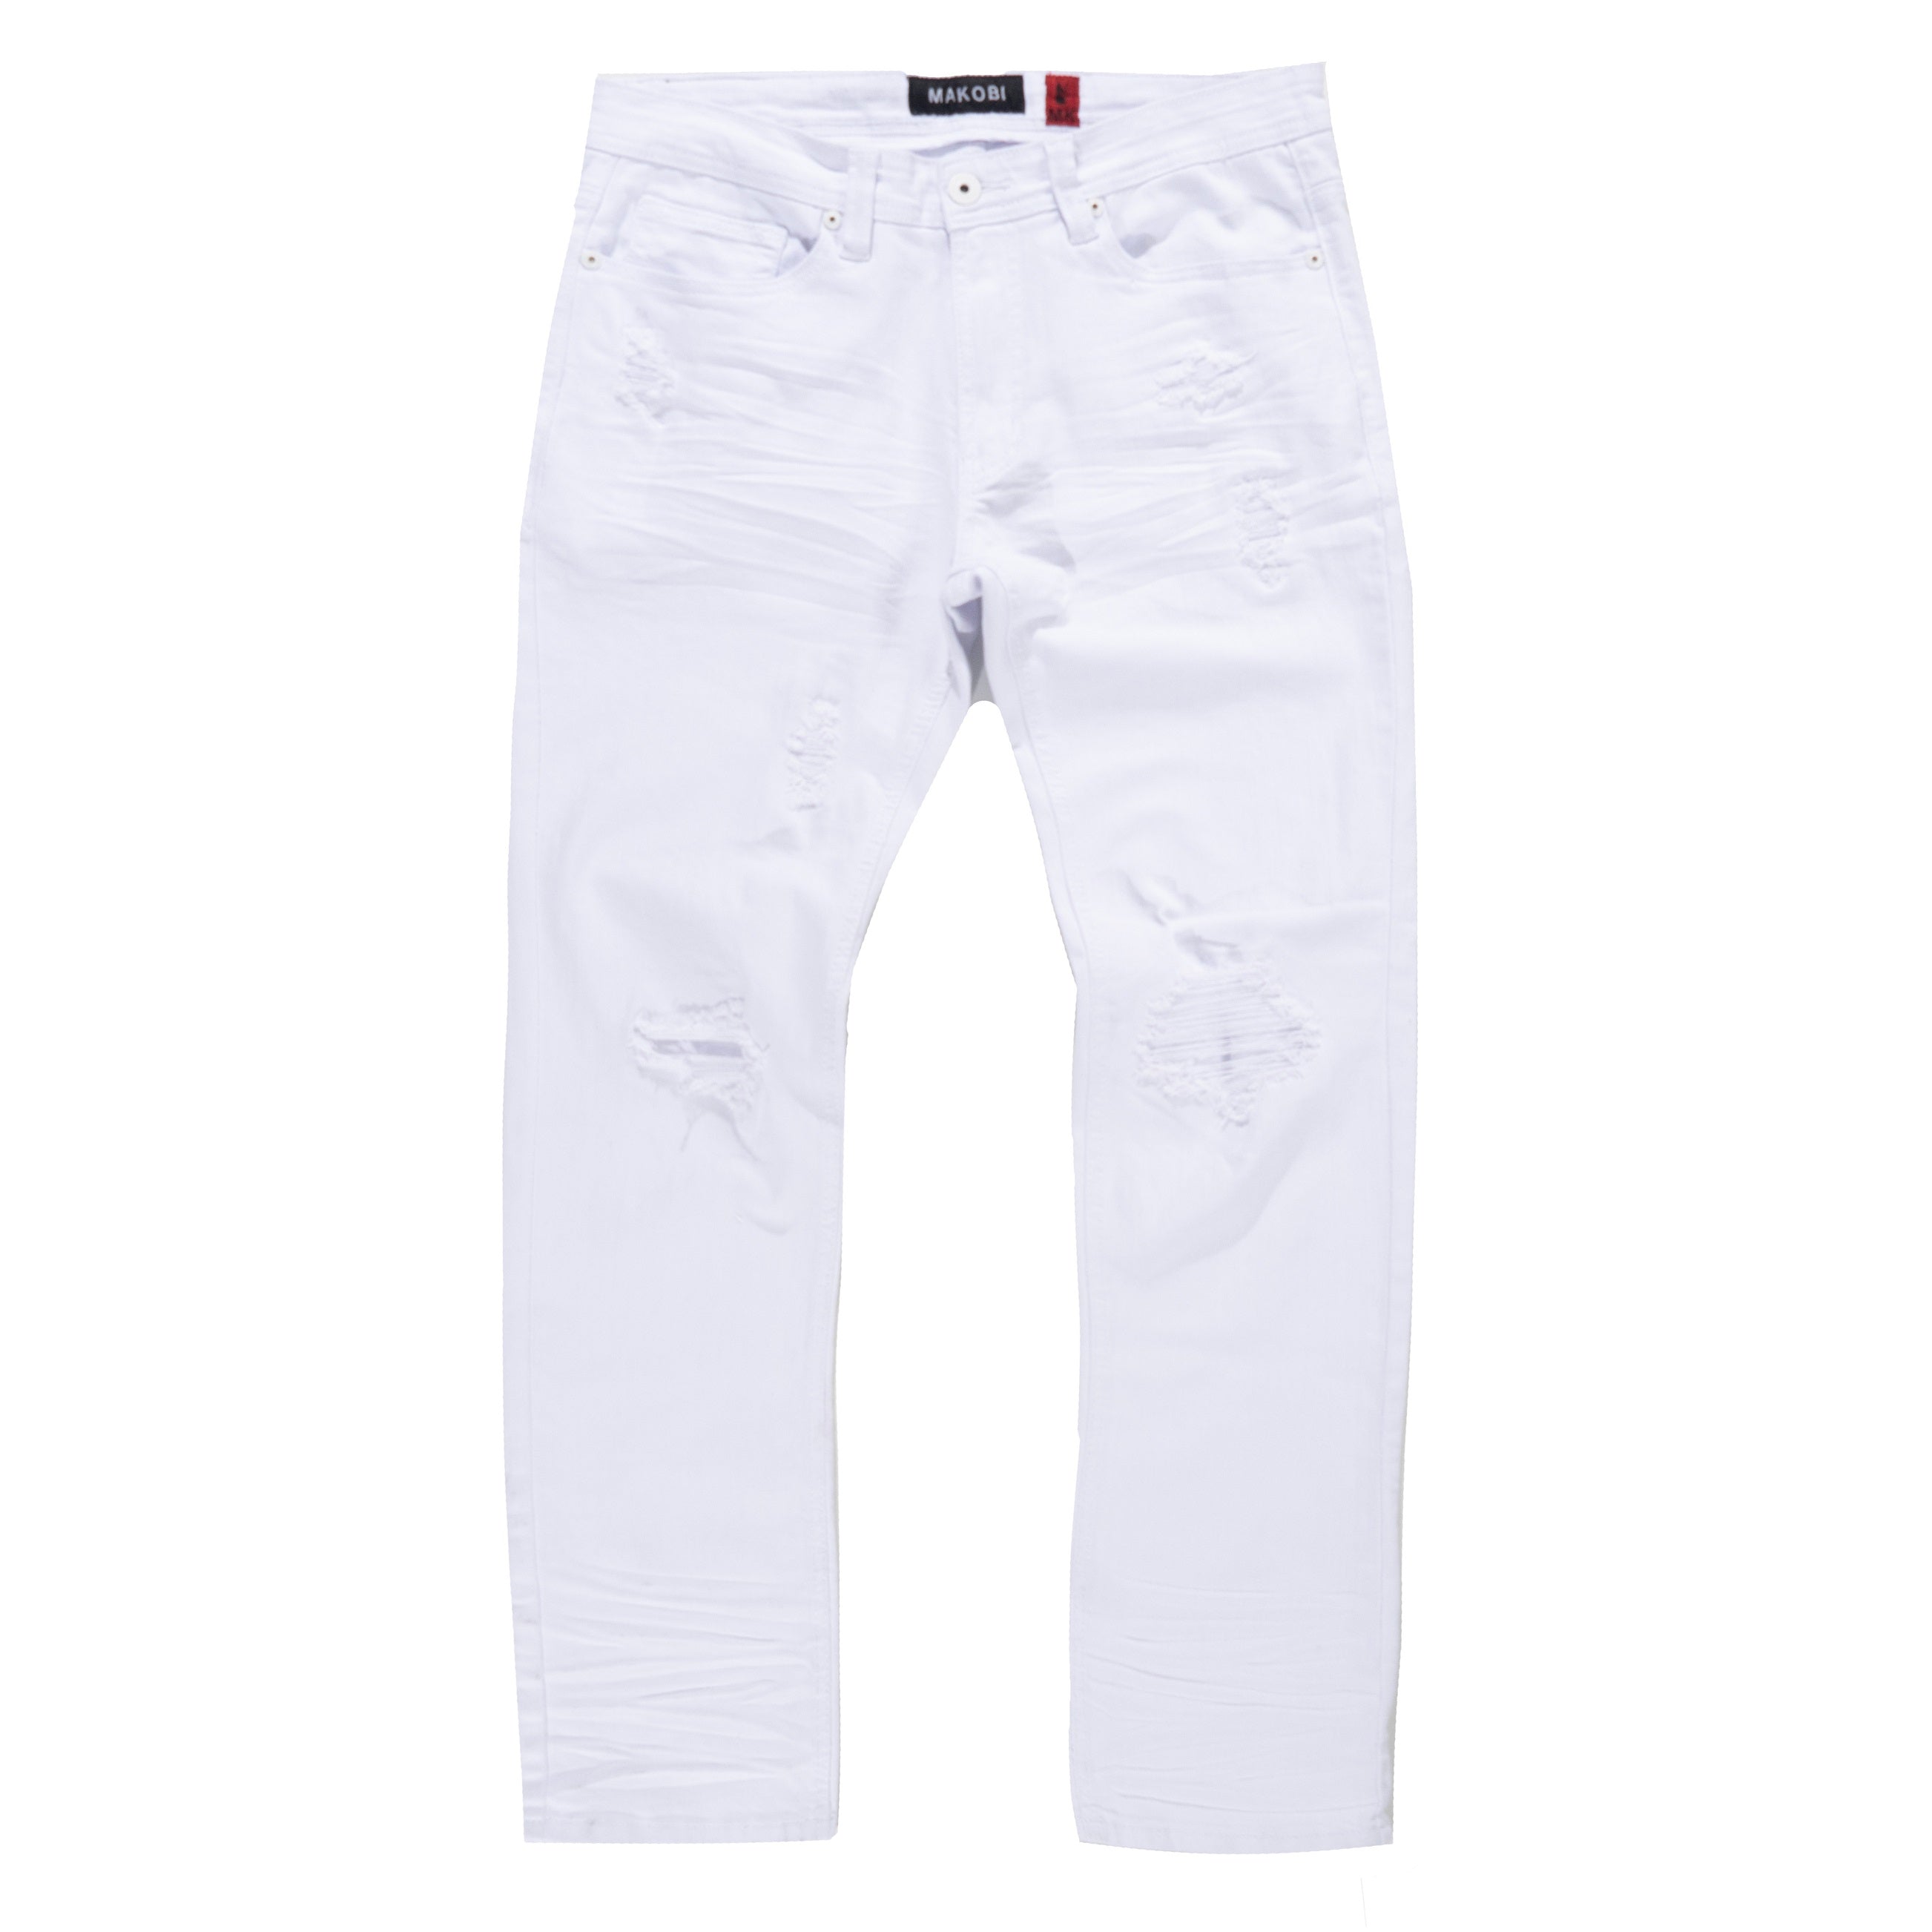 M1932 Makobi Brighton Sredded Twill Jeans - سفید